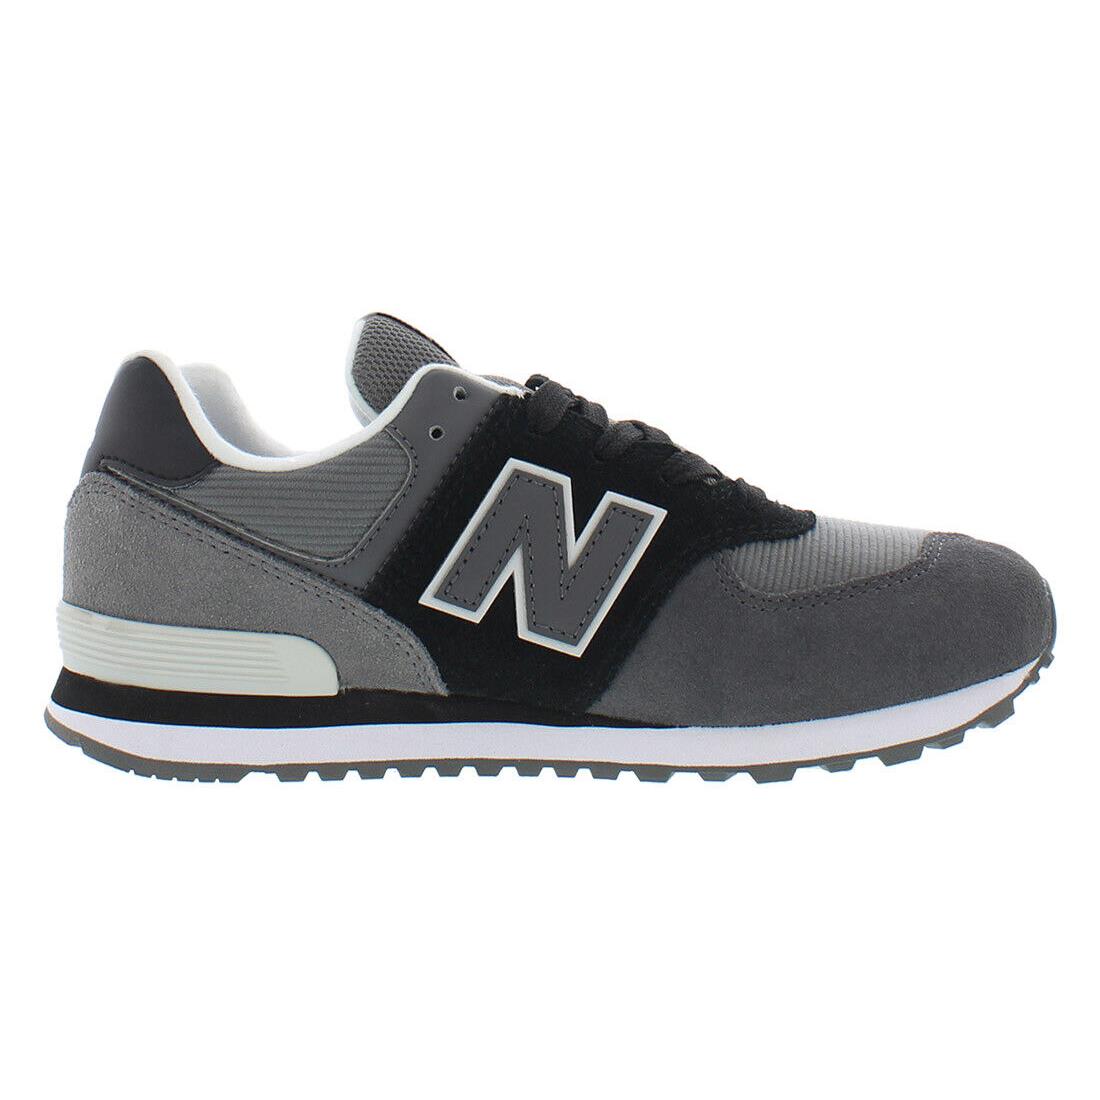 New Balance 574 Boys Shoes Size 11 Color: Grey/black/white